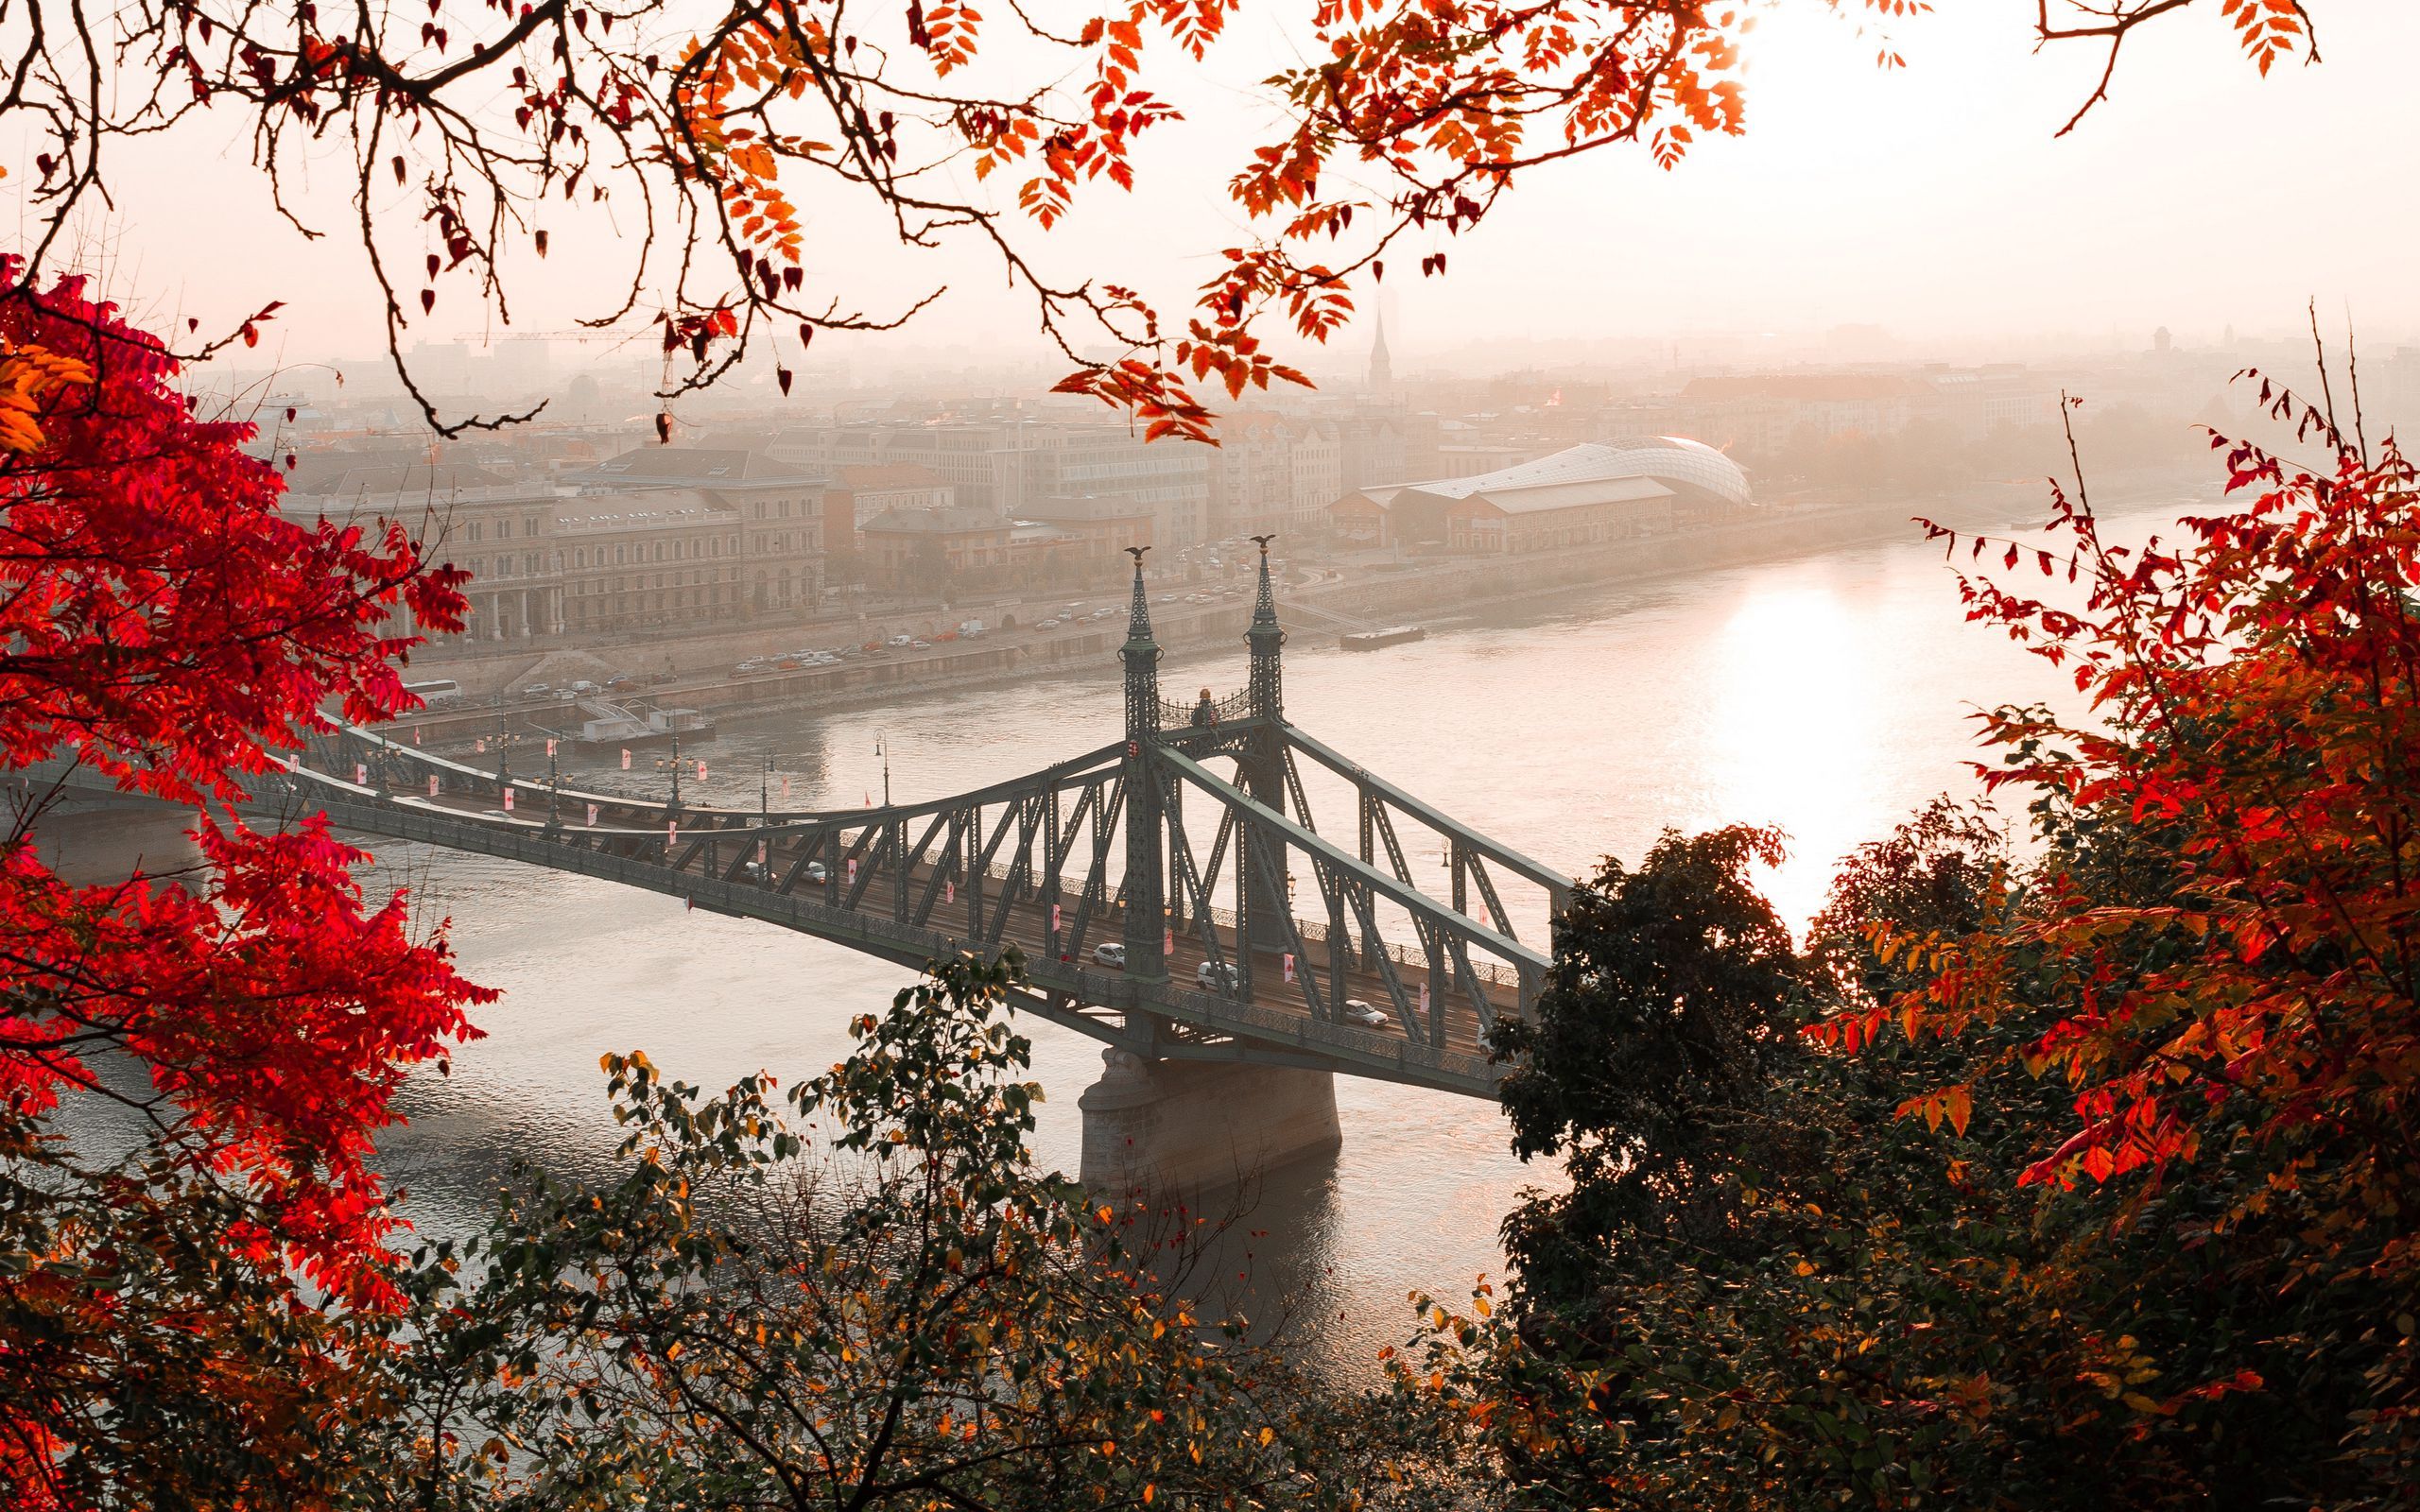 Download wallpaper 2560x1600 bridge, autumn, city, citadella, budapest, hungary widescreen 16:10 HD background